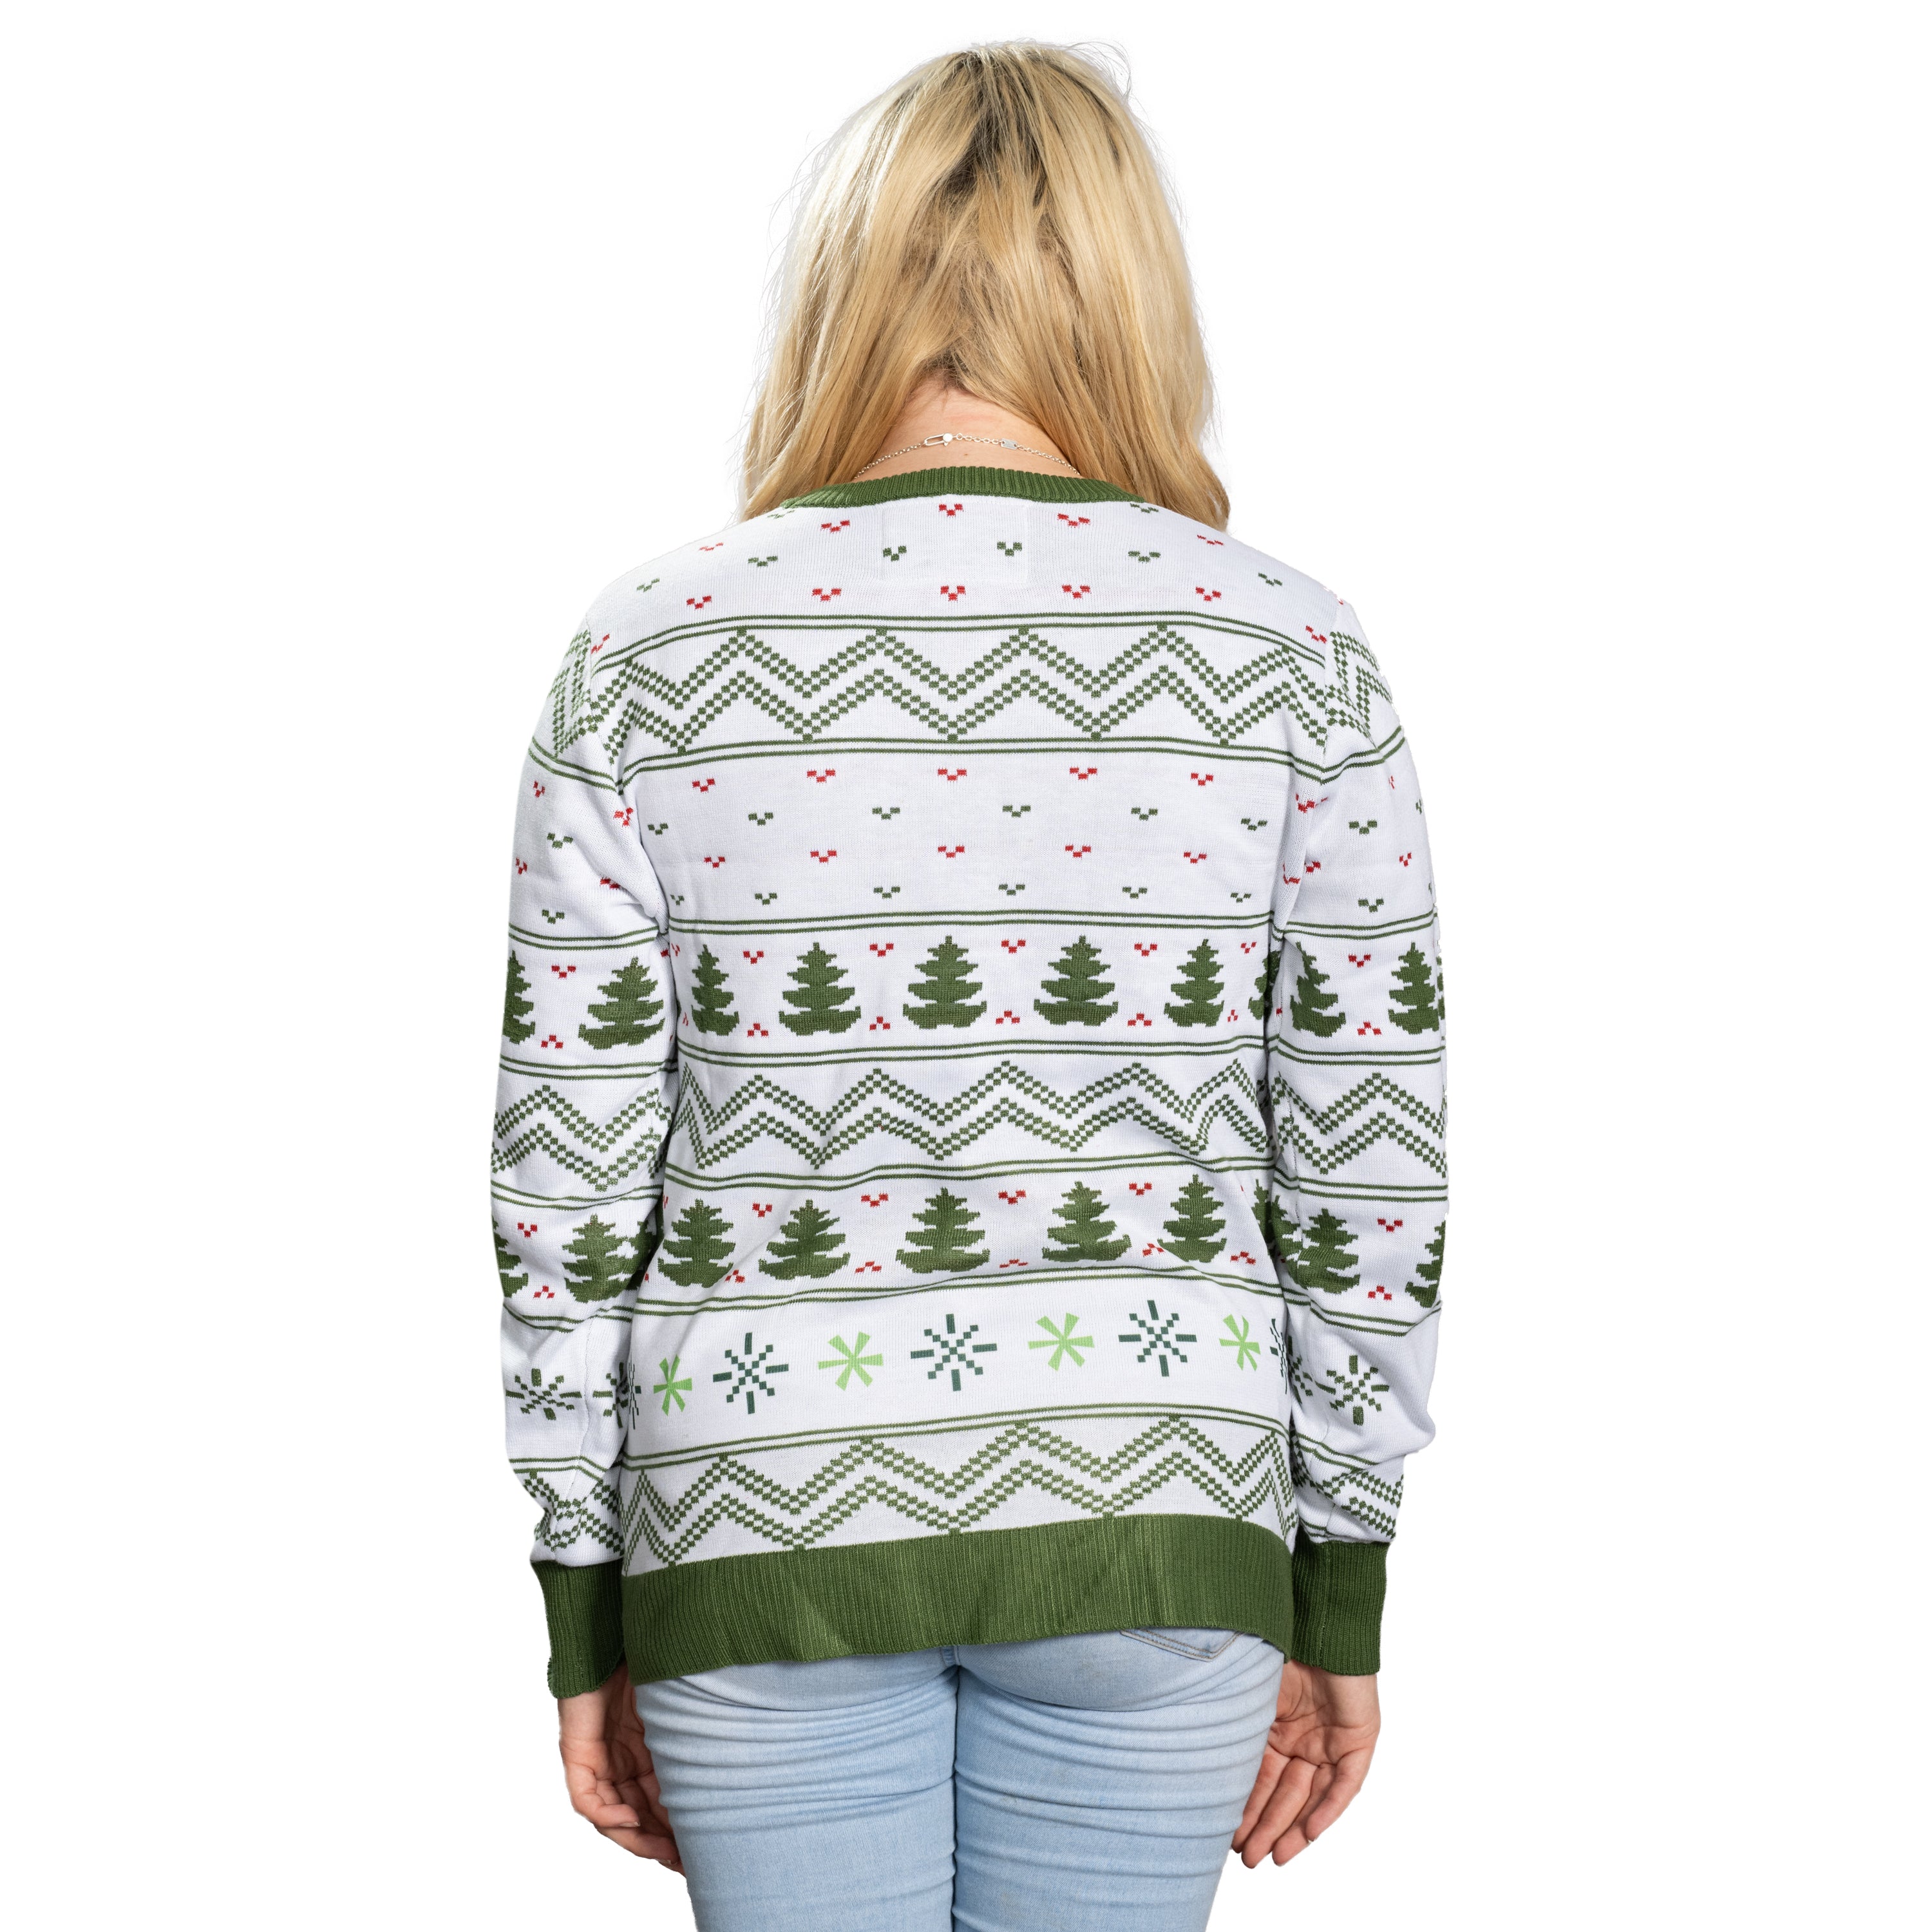 Green Greetings TMNT Christmas Sweater